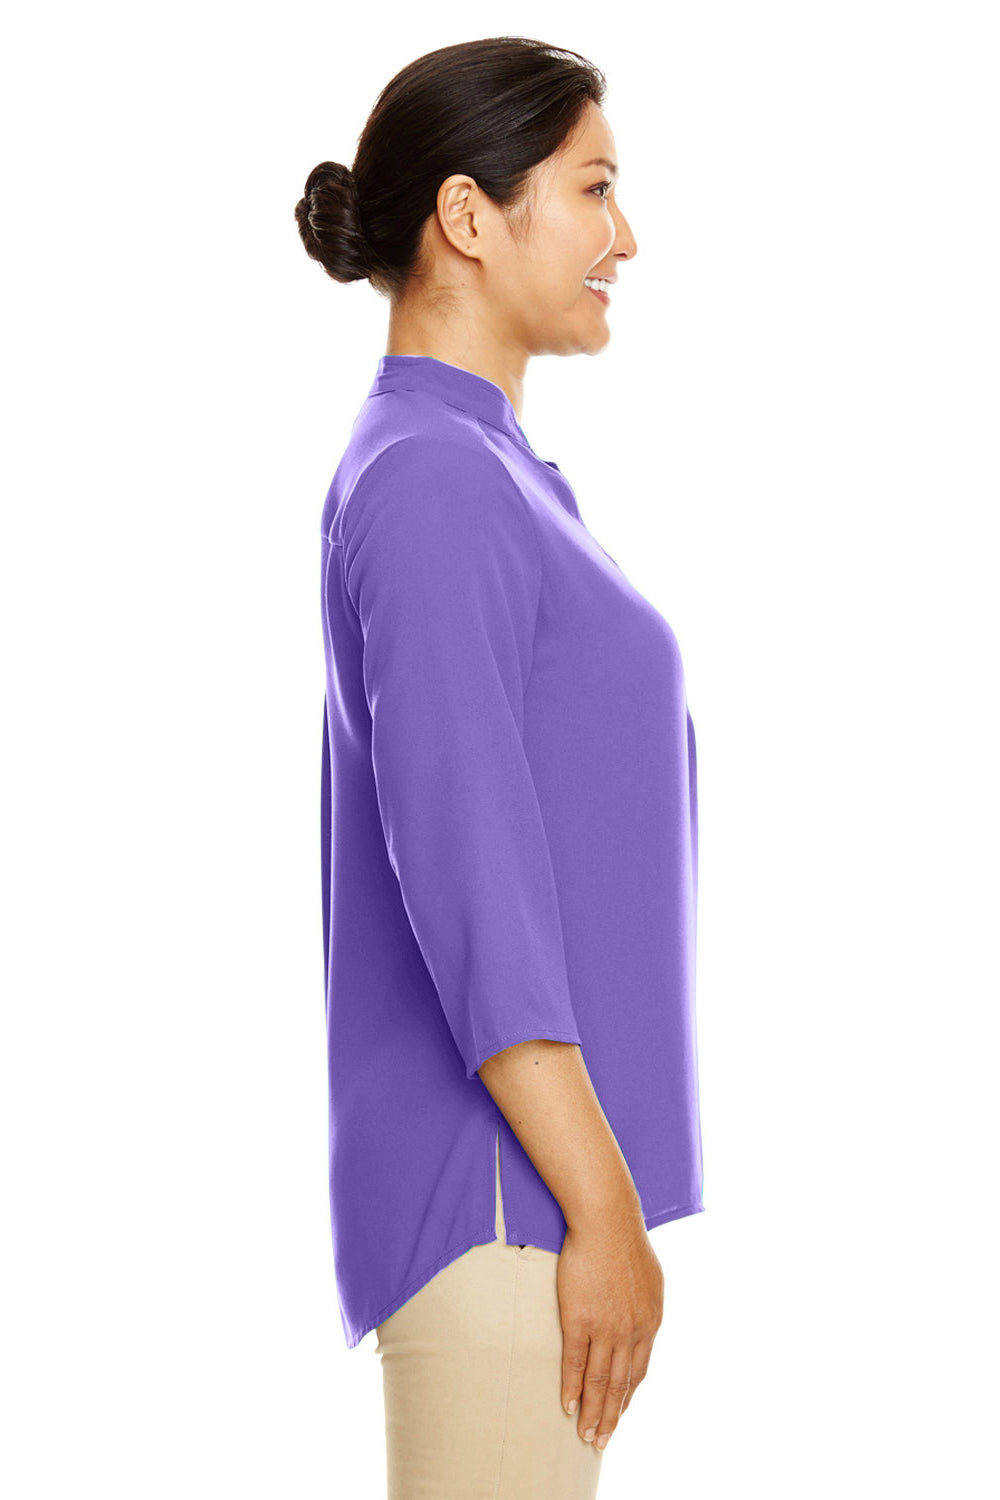 Devon & Jones DP611W Womens Perfect Fit Short Sleeve 1/4 Zip Crepe Tunic Grape Purple SIde